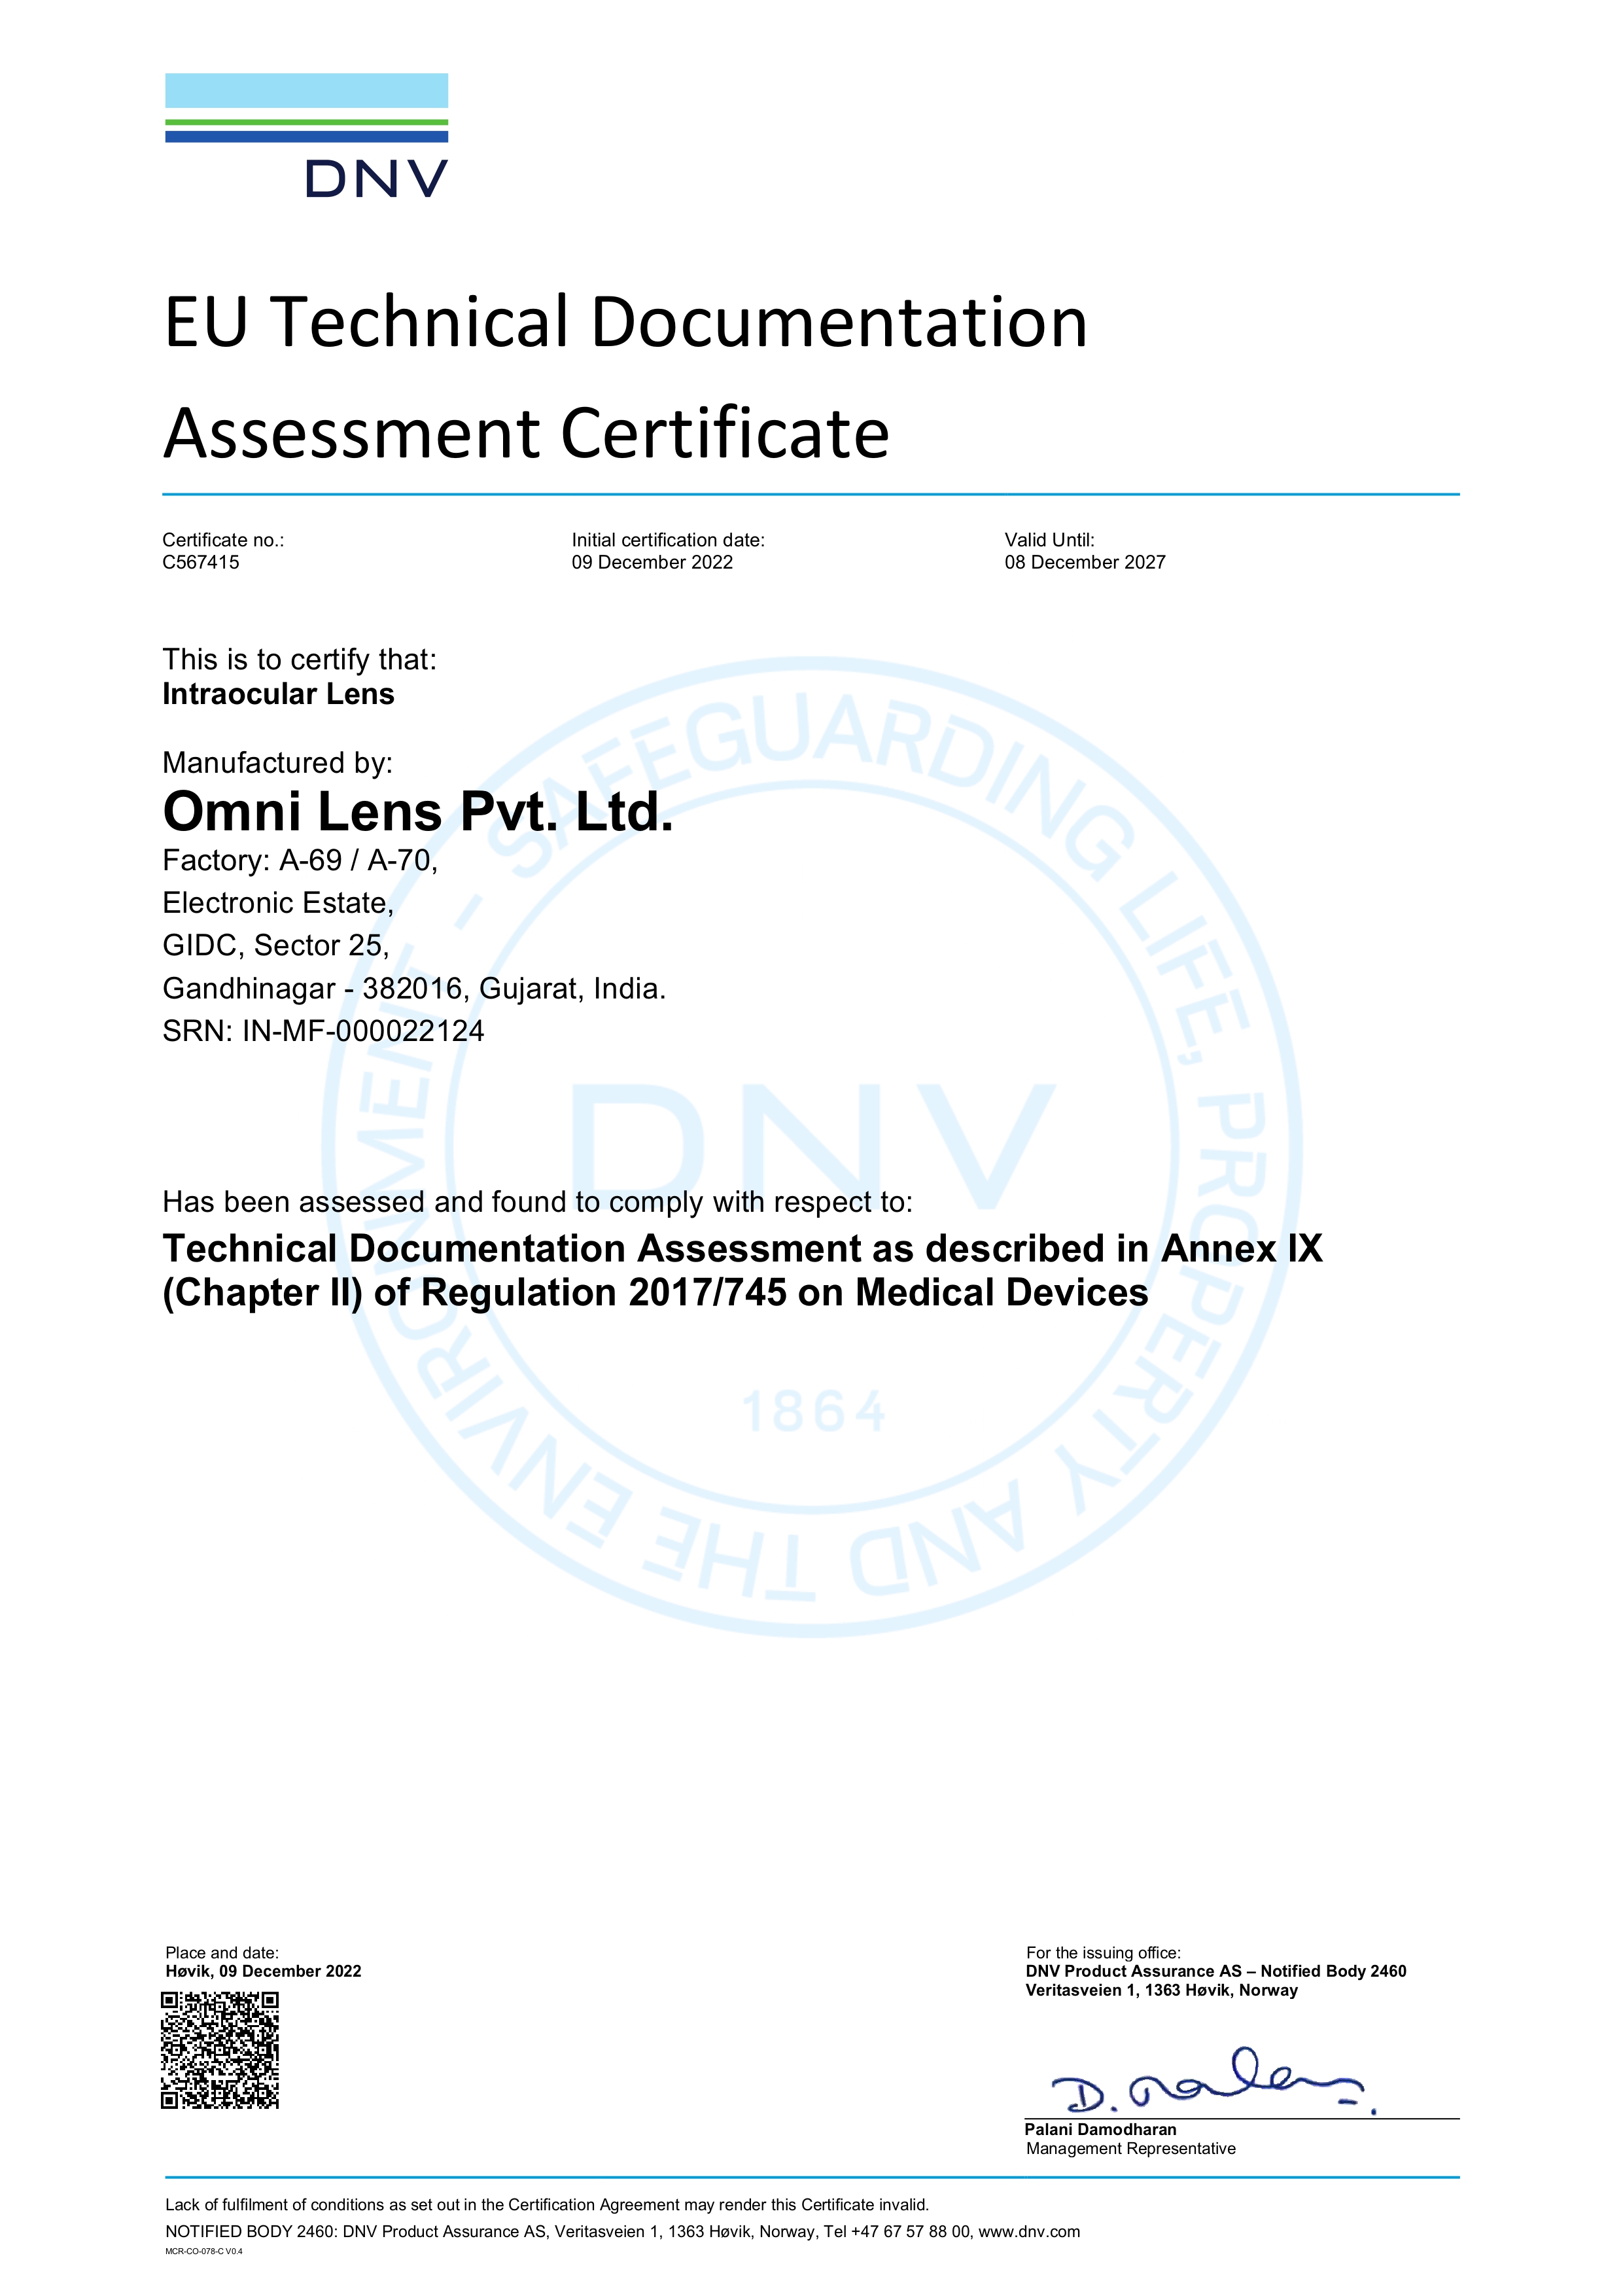 EU Technical Documentation Certificate